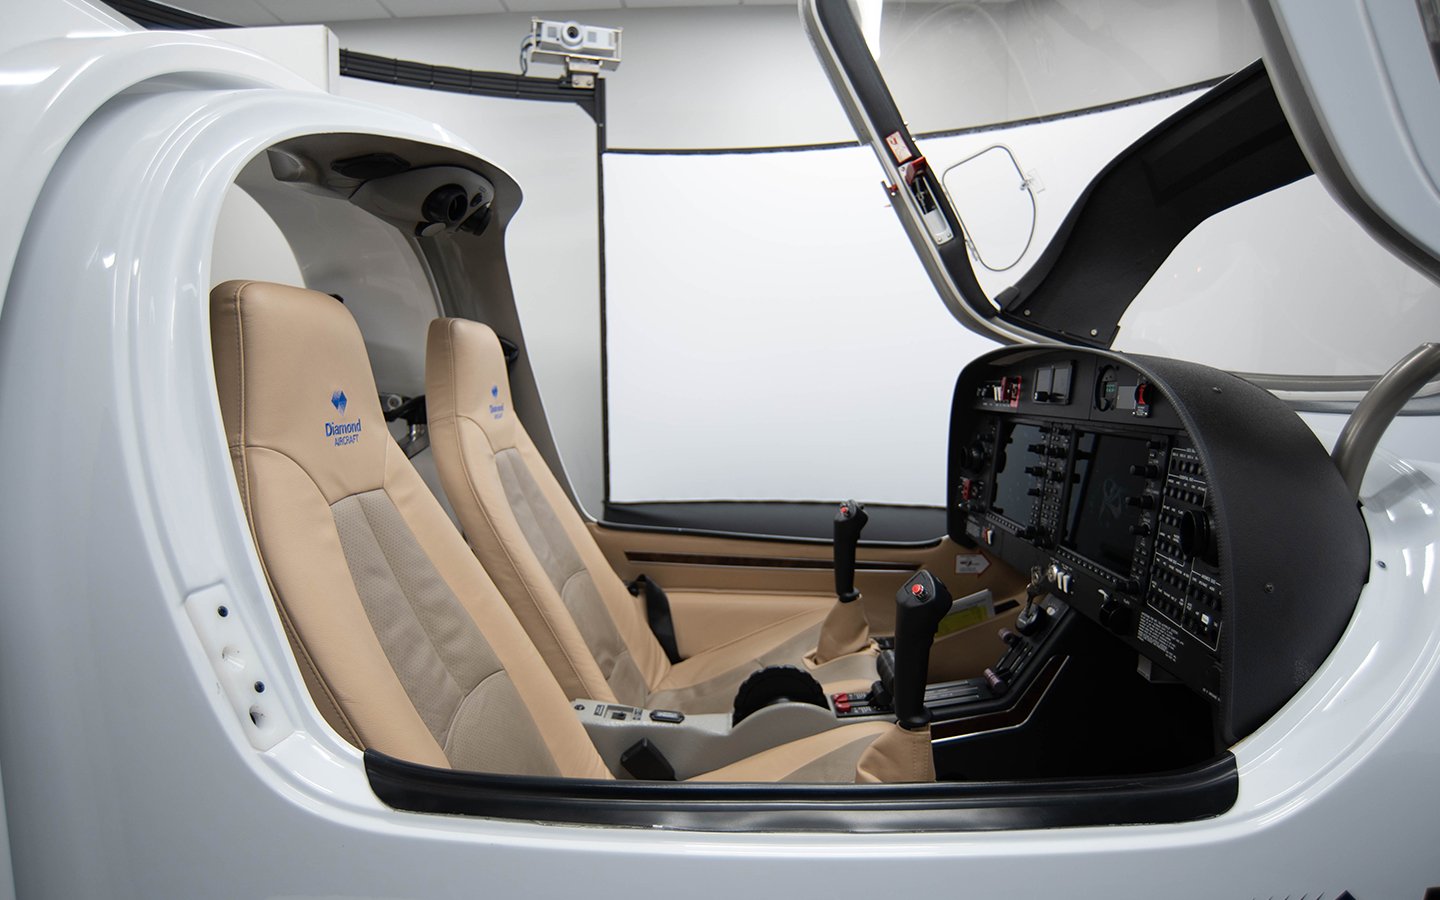 The Diamond simulator cockpit has the same controls, seats, and visual setup as a Diamond aircraft.